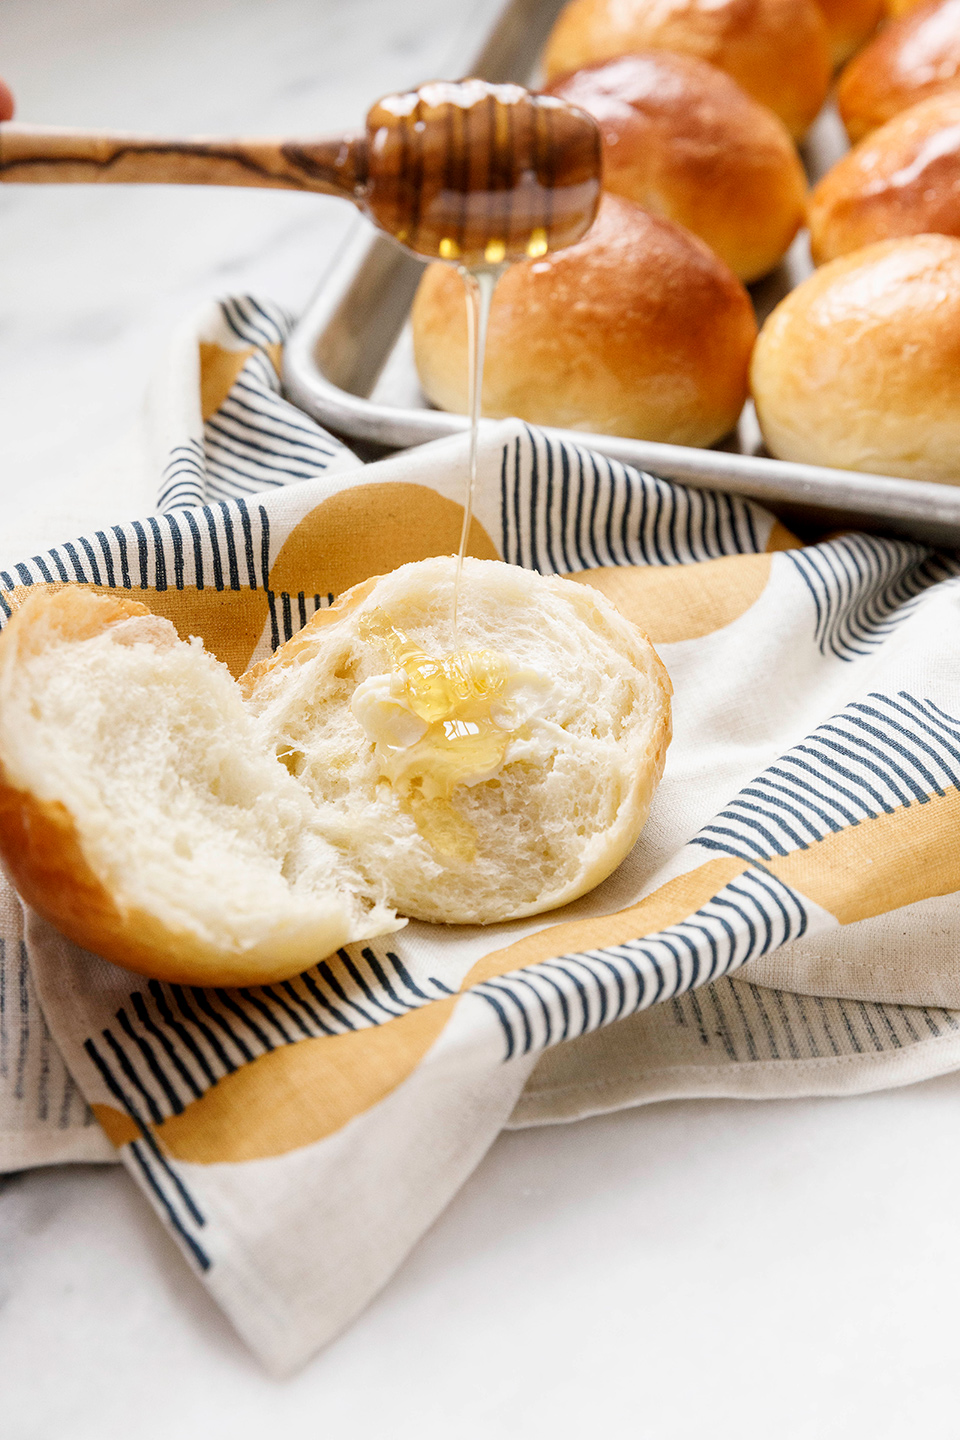 commercial food photographer - honey drizzled on milk bread rolls baked by Gesine Bullock-Prado